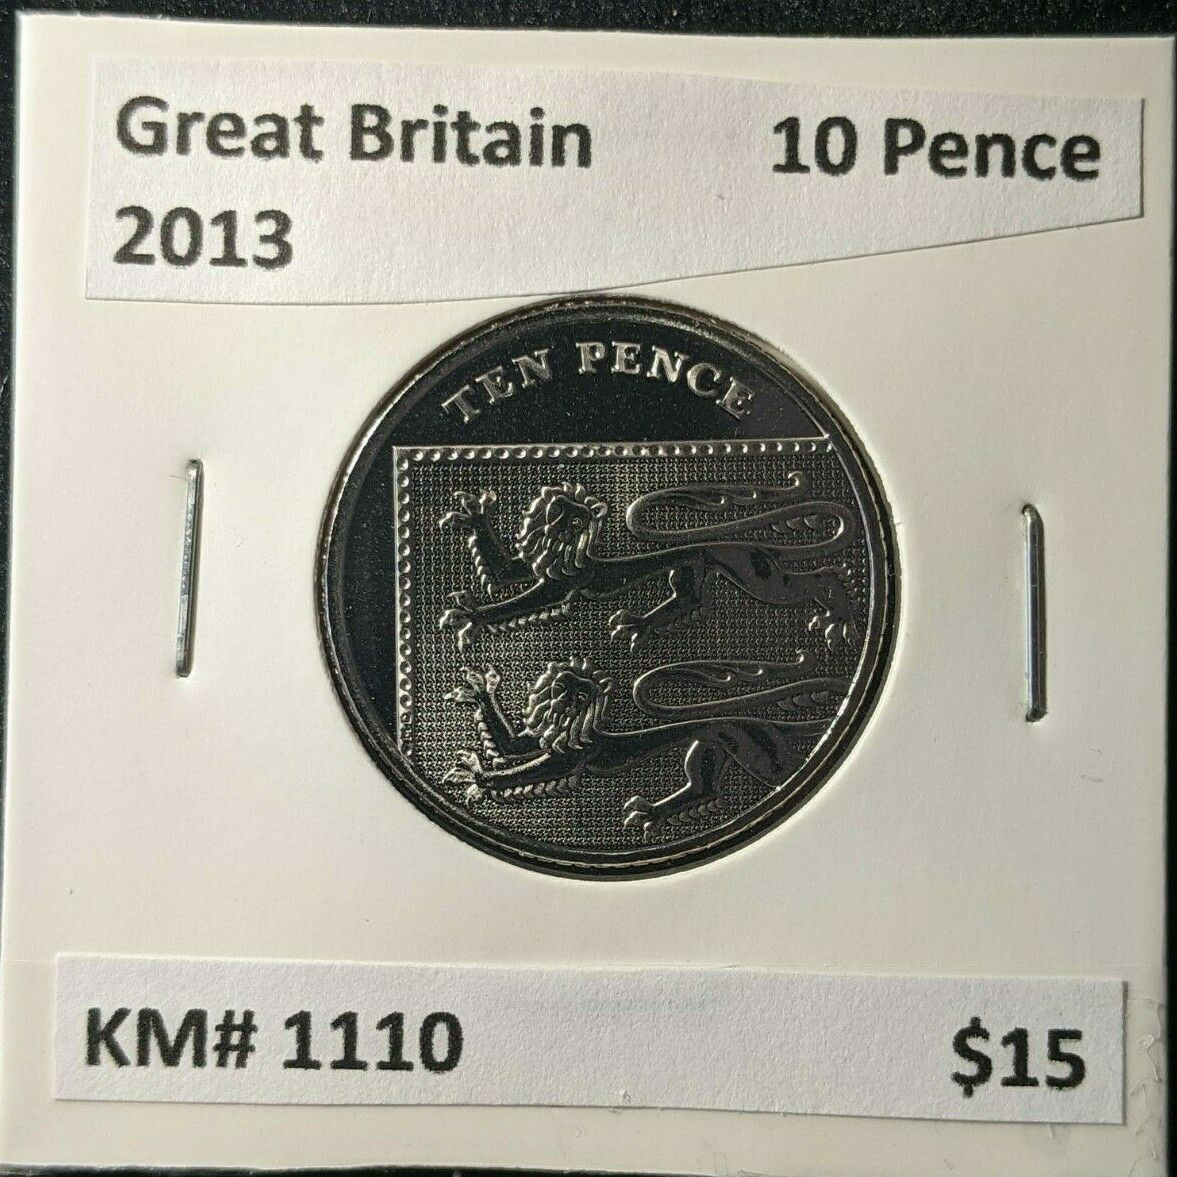 Great Britain 2013 10 Pence KM# 1110 #390